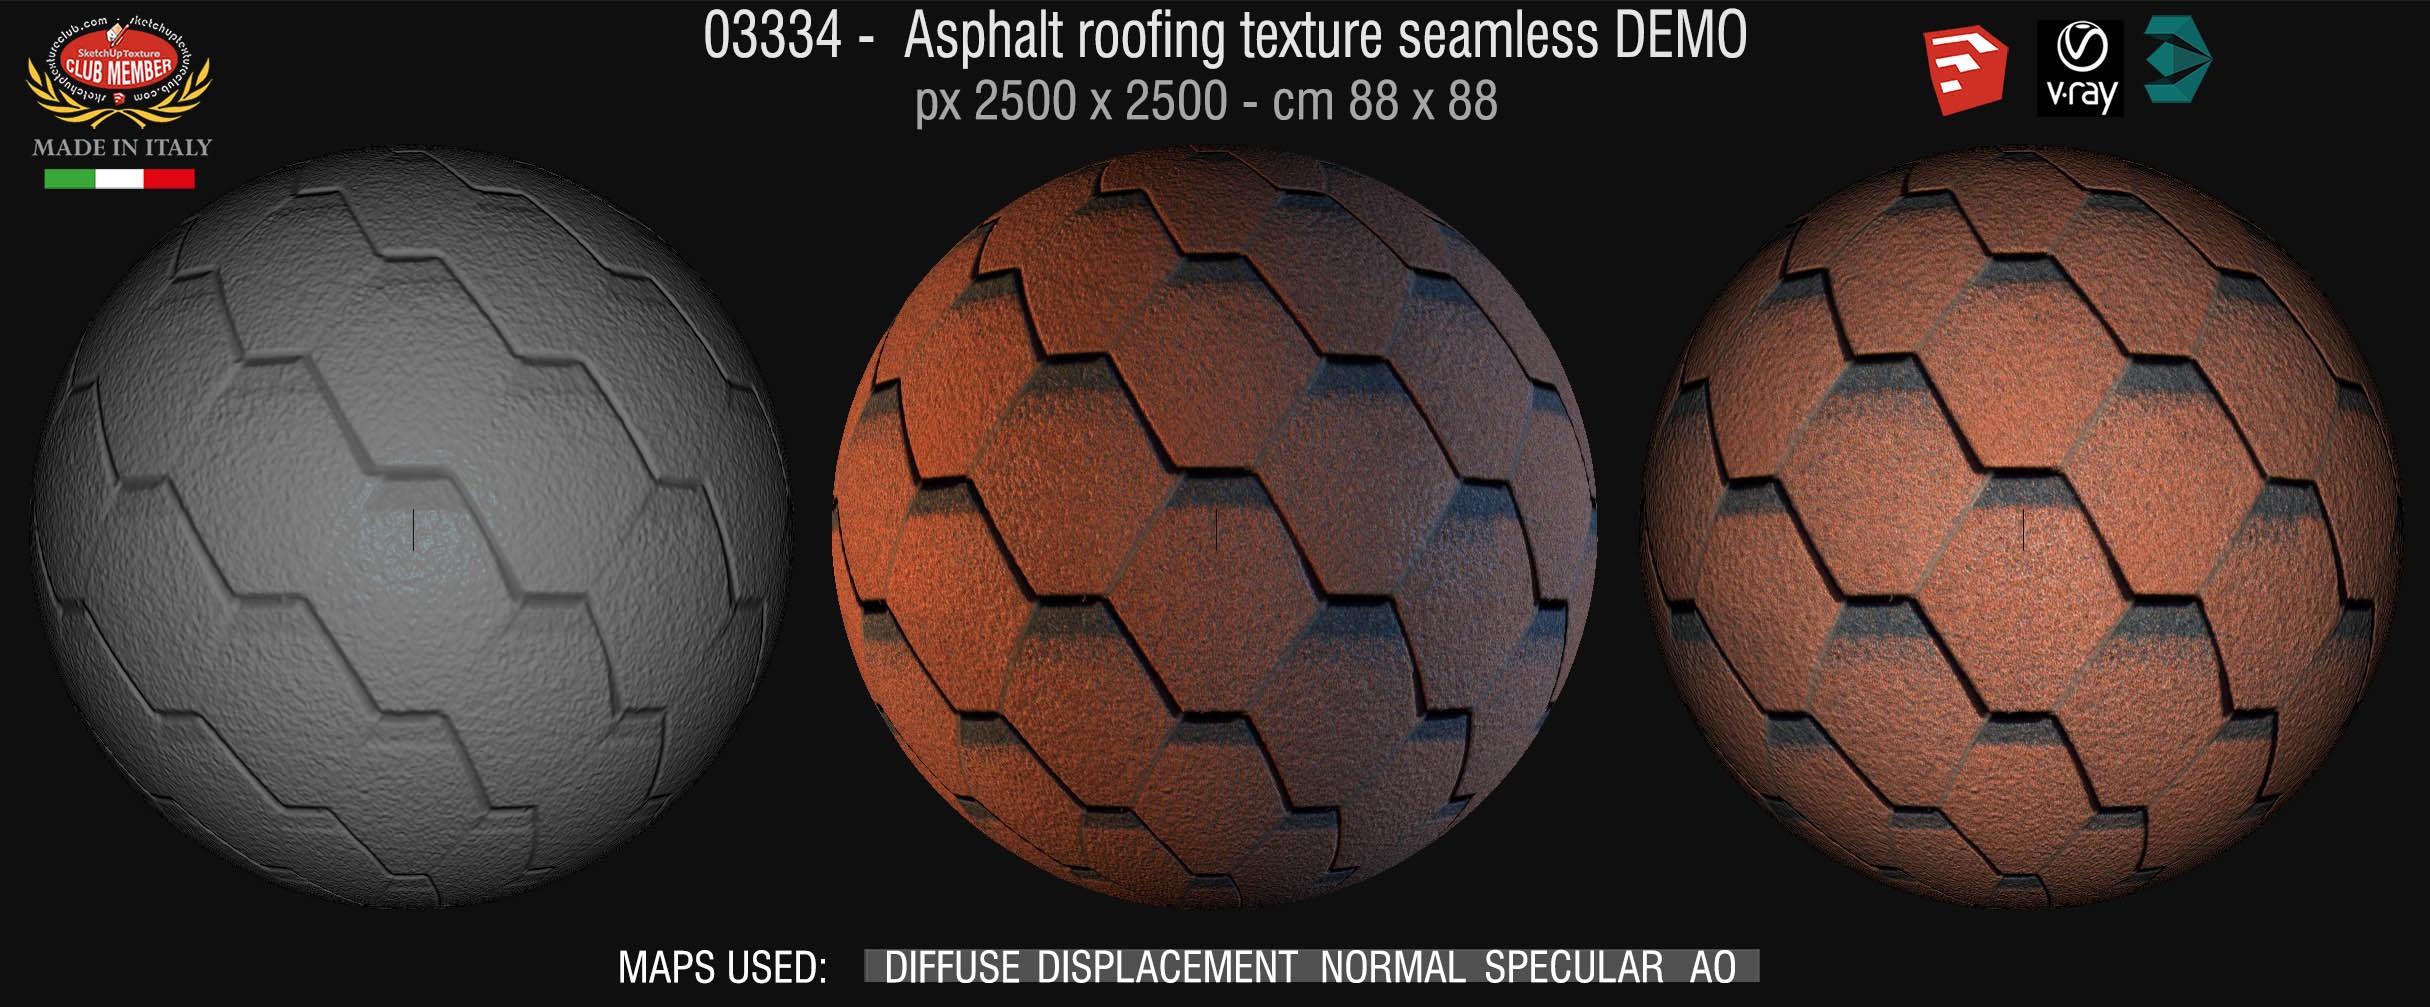 03334 Asphalt roofing texture seamless + maps DEMO